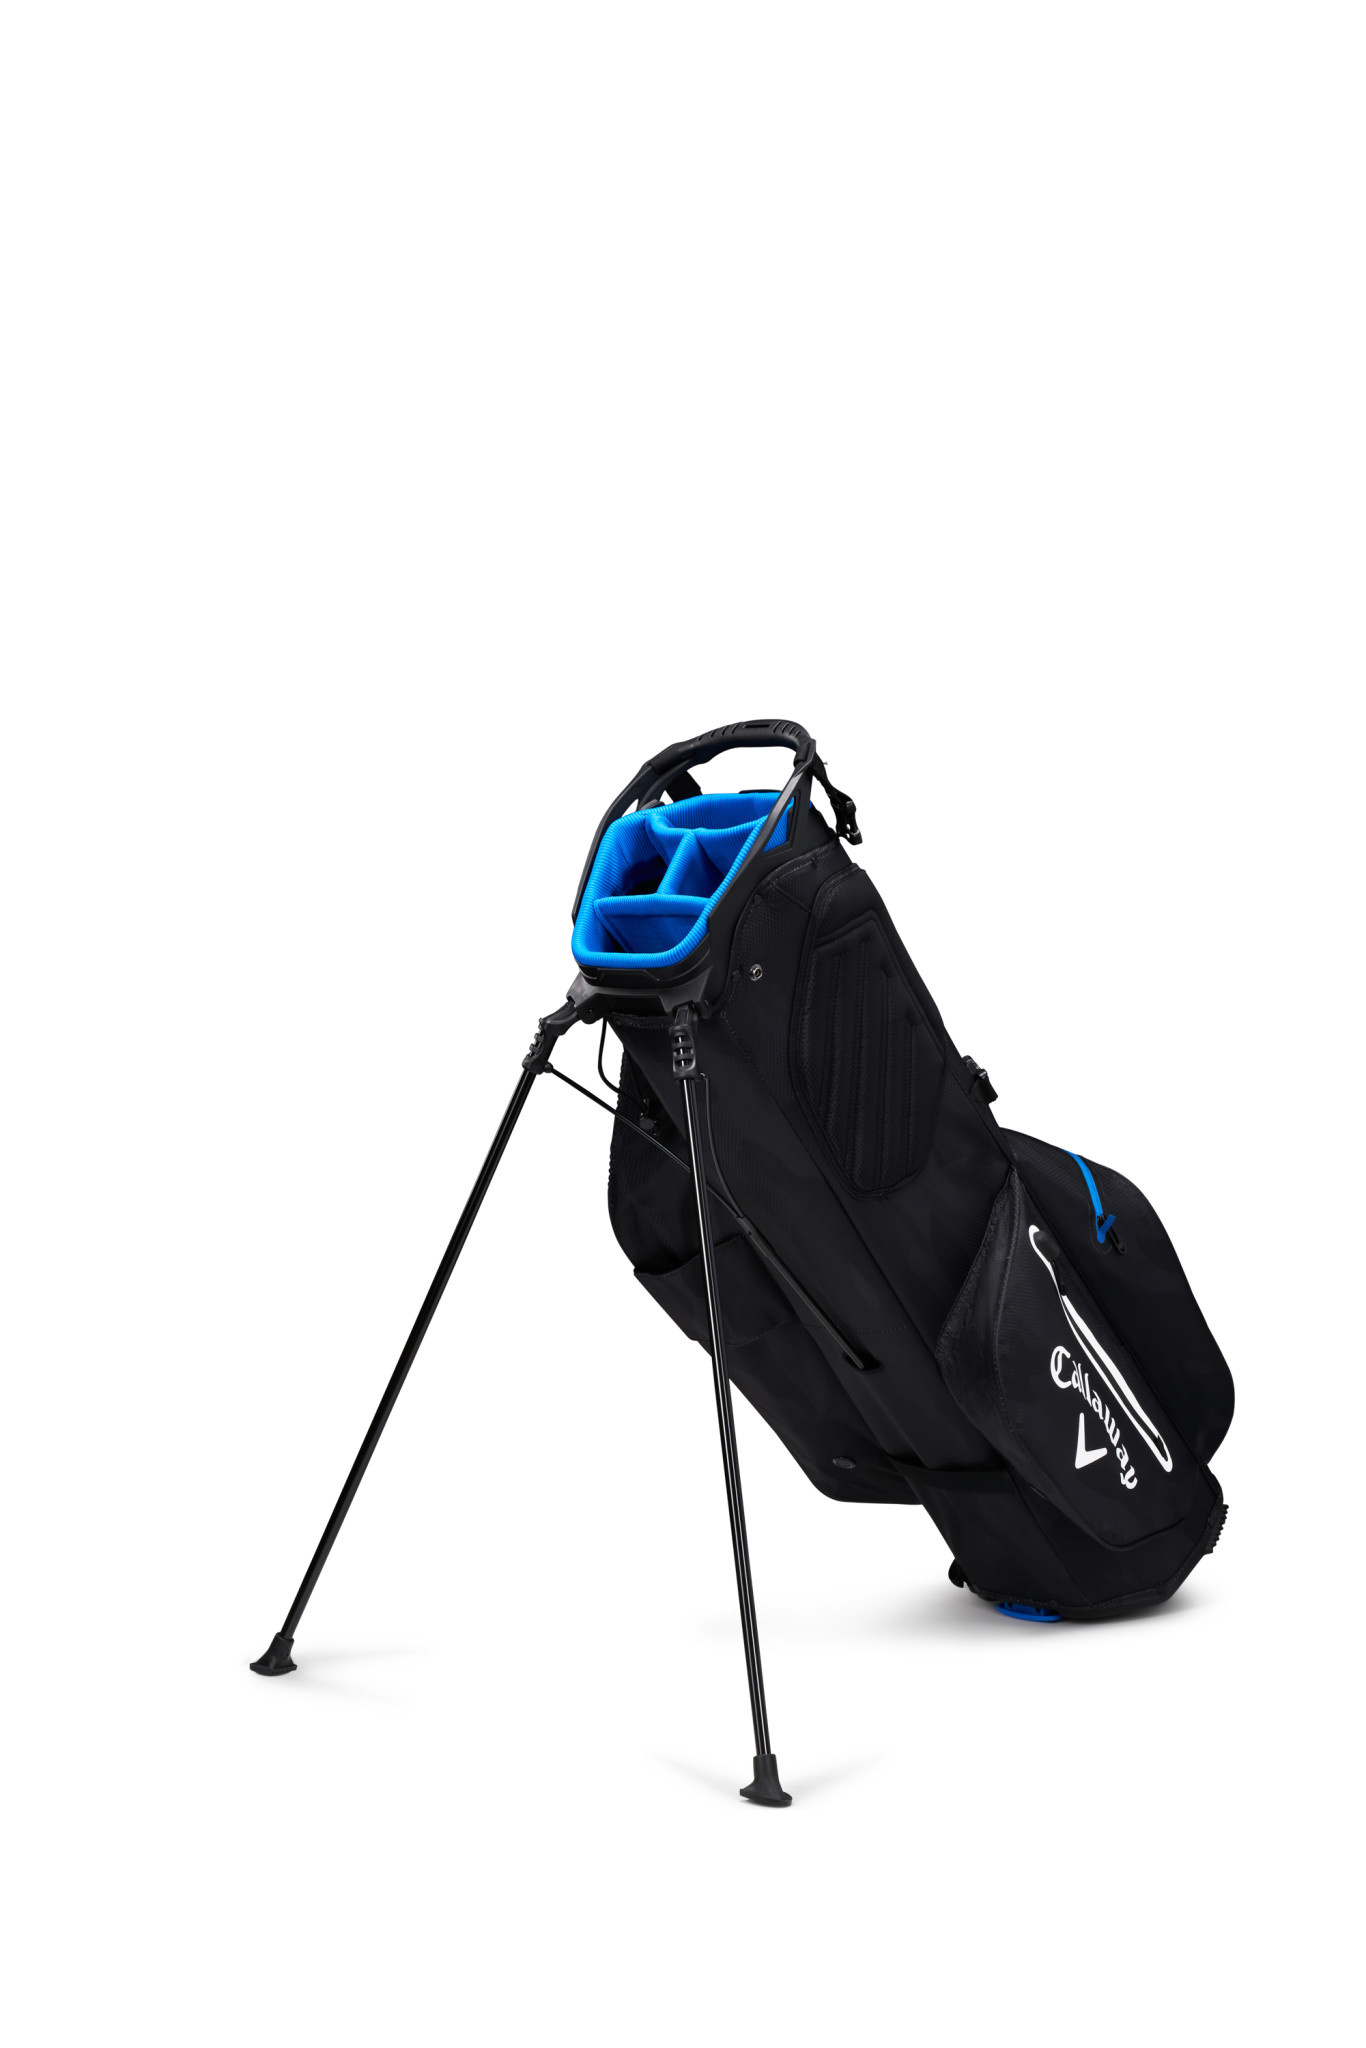 Carry bag Fairway C HD golftas zwart blauw Frank Hoekzema Golf